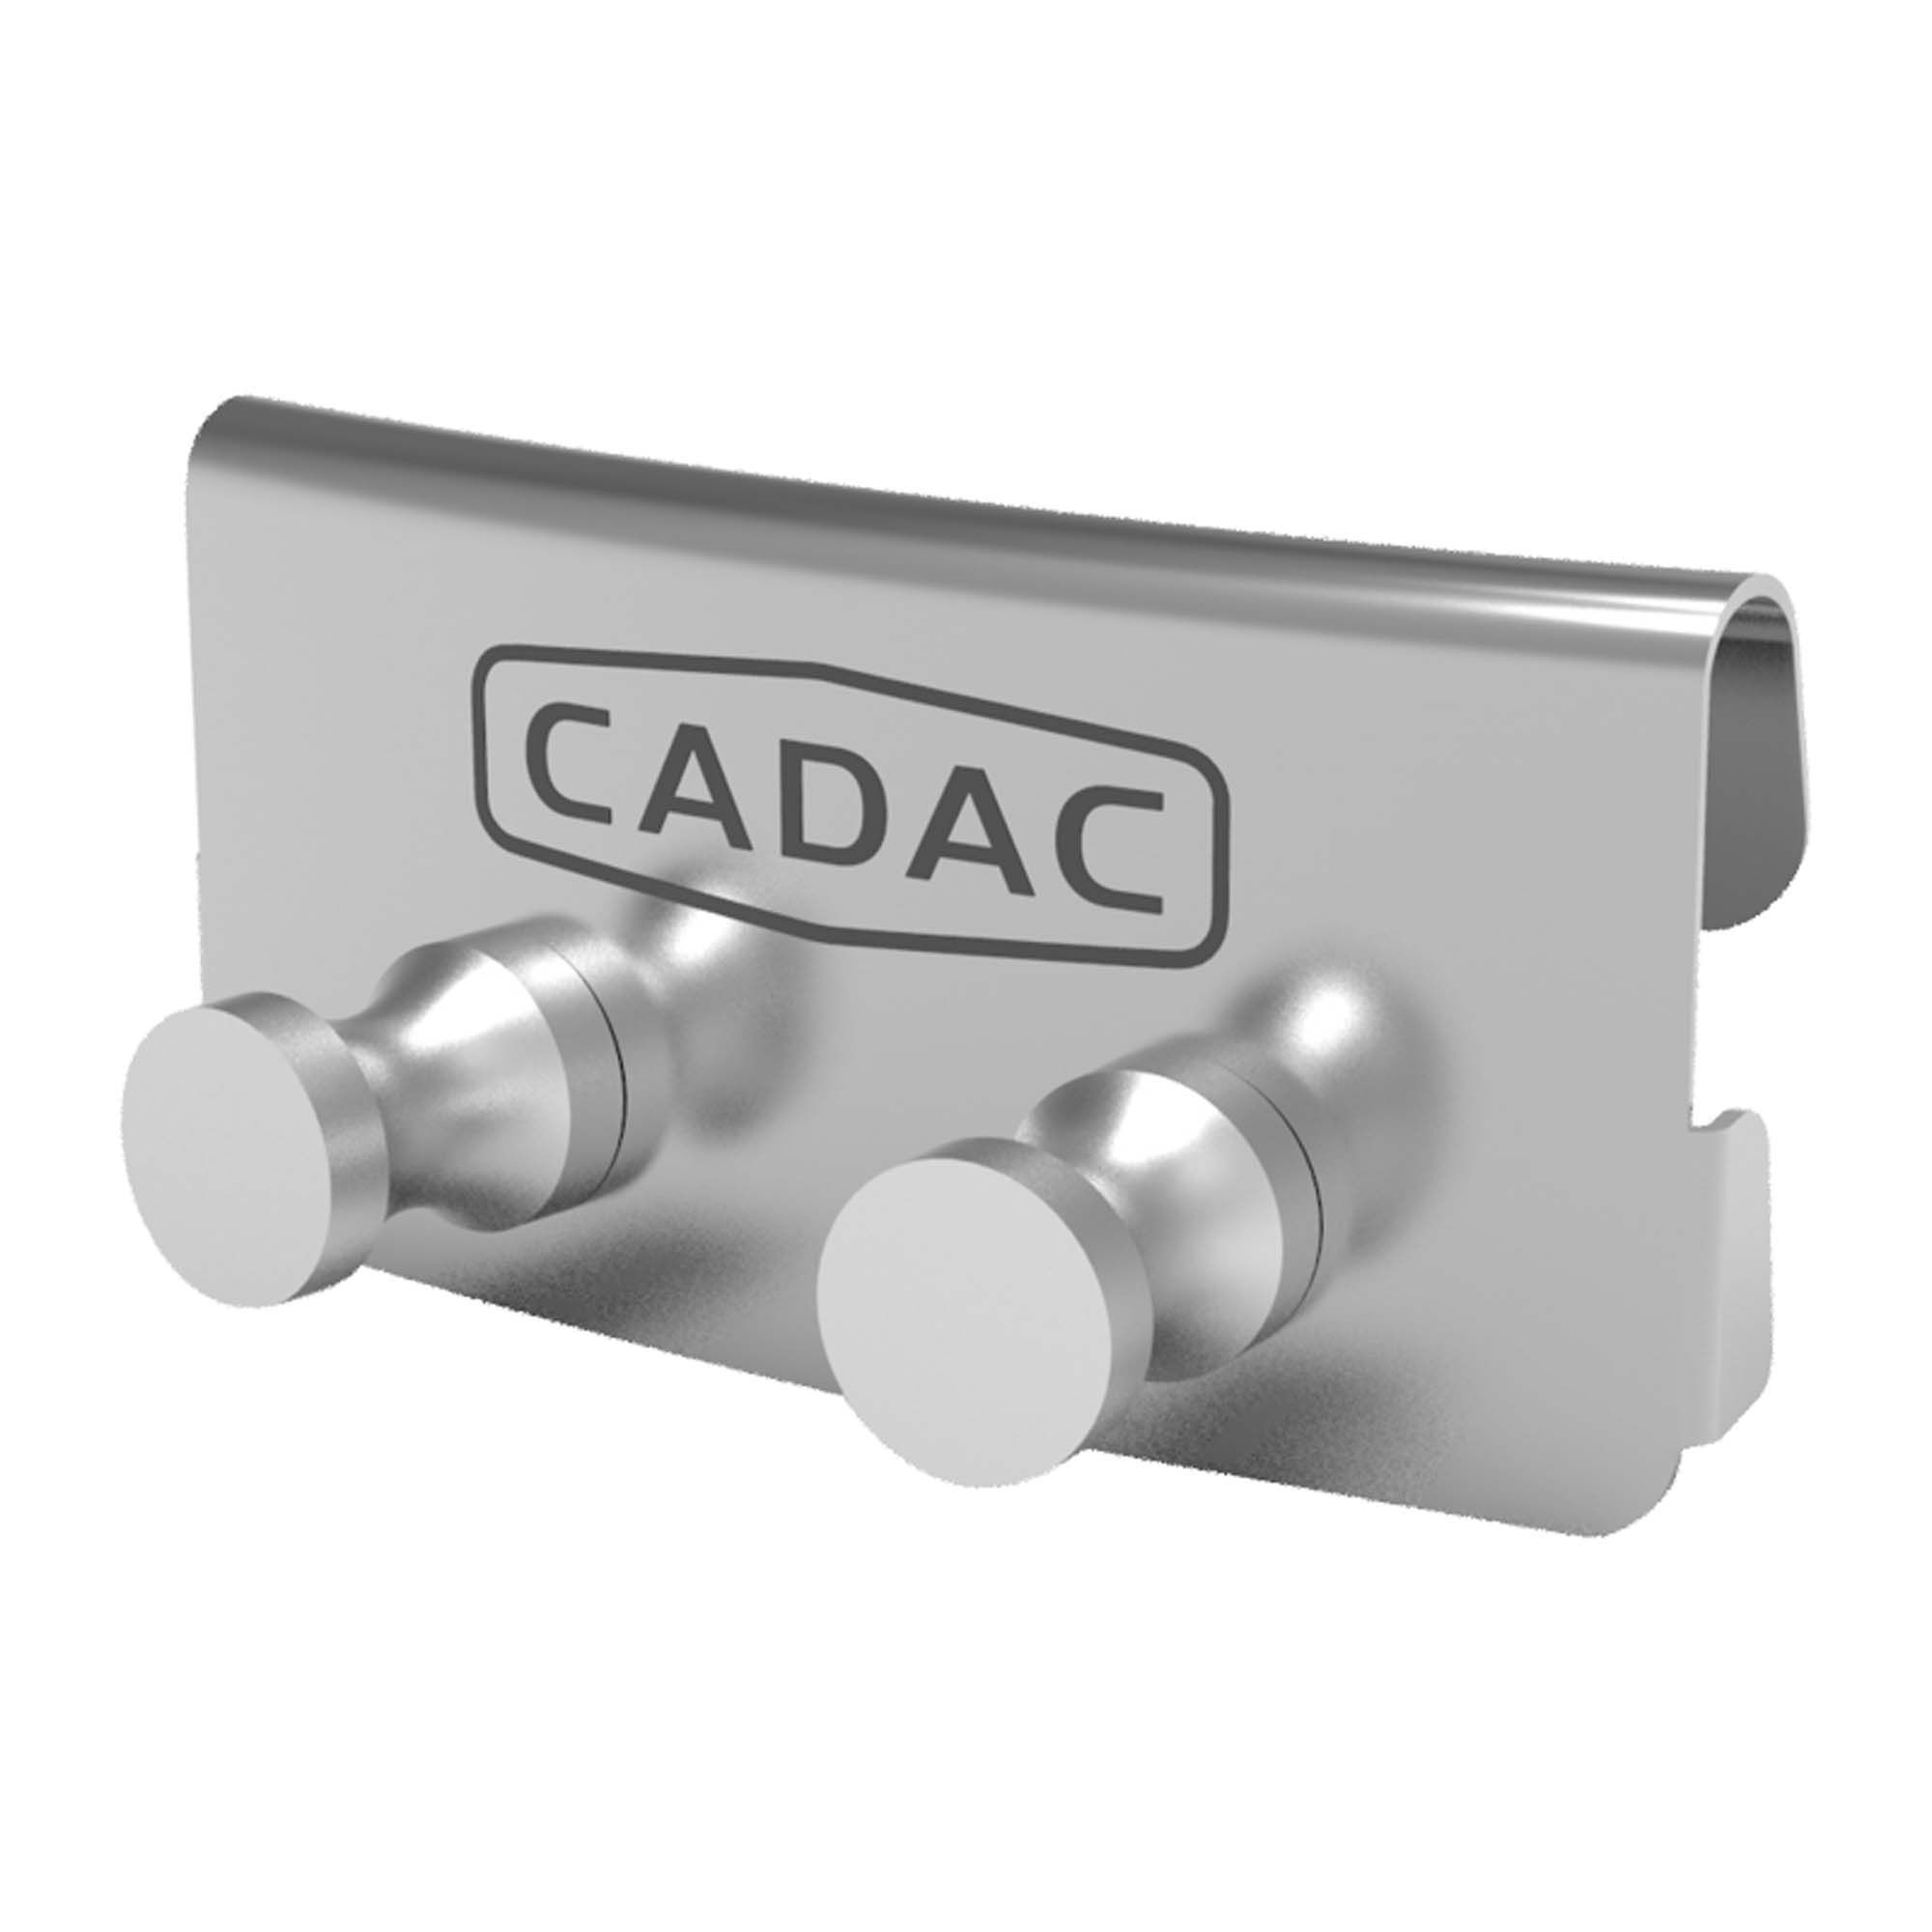 CADAC Mini Gereedschapshaakjes